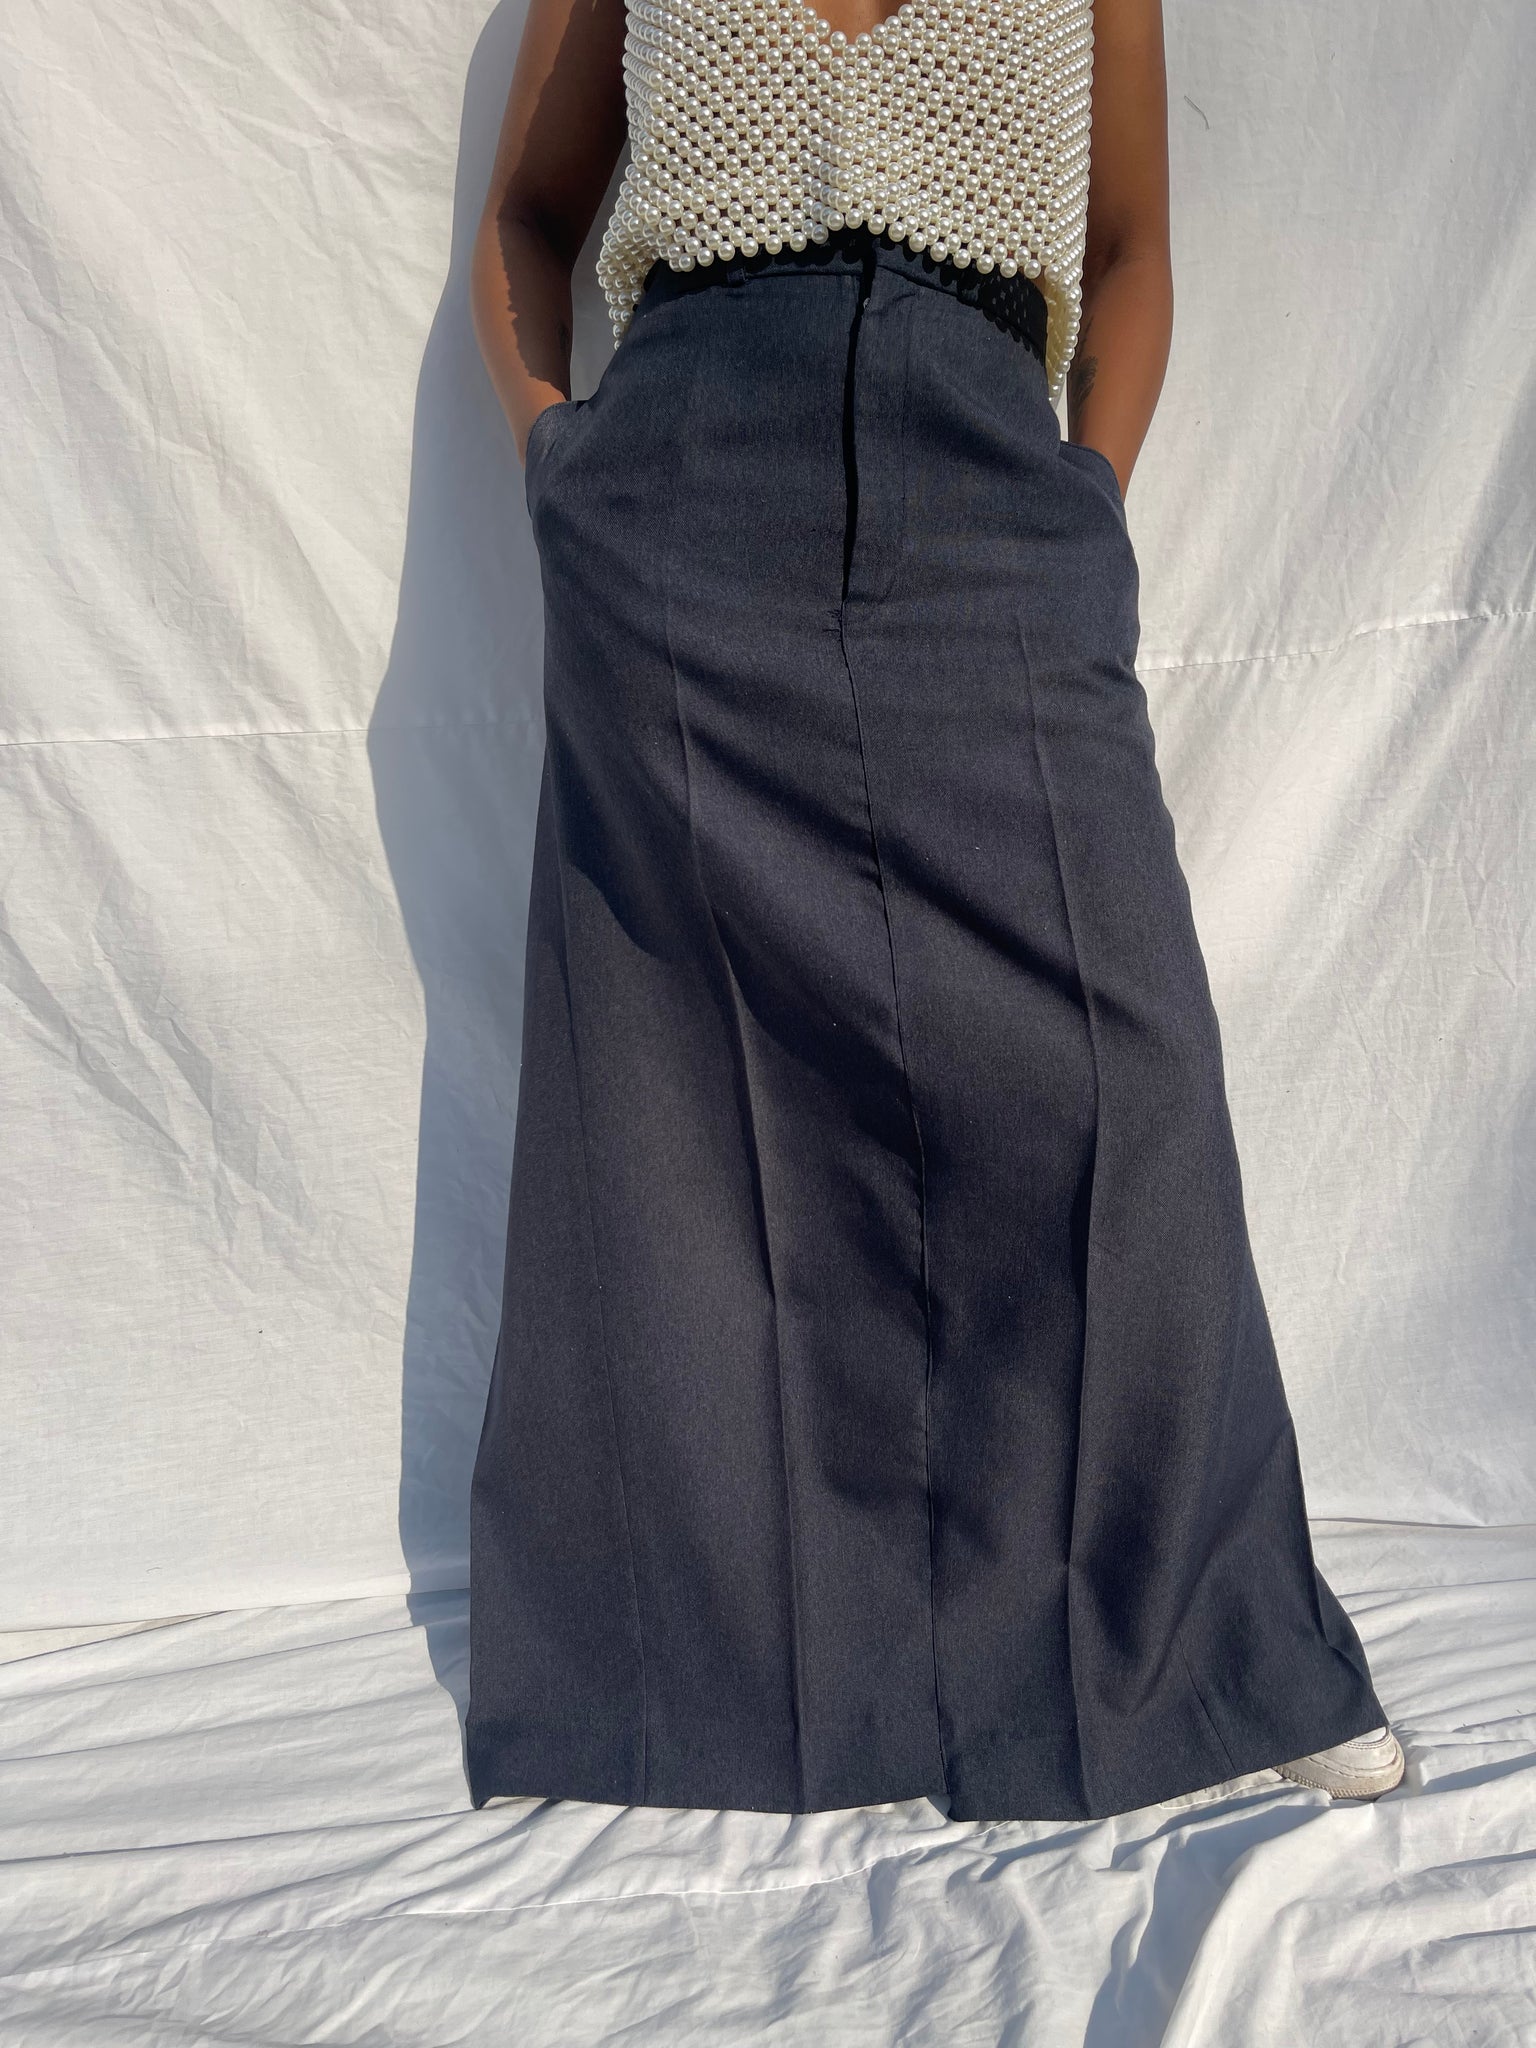 Navy Reworked Skirt with Back Slit (38)